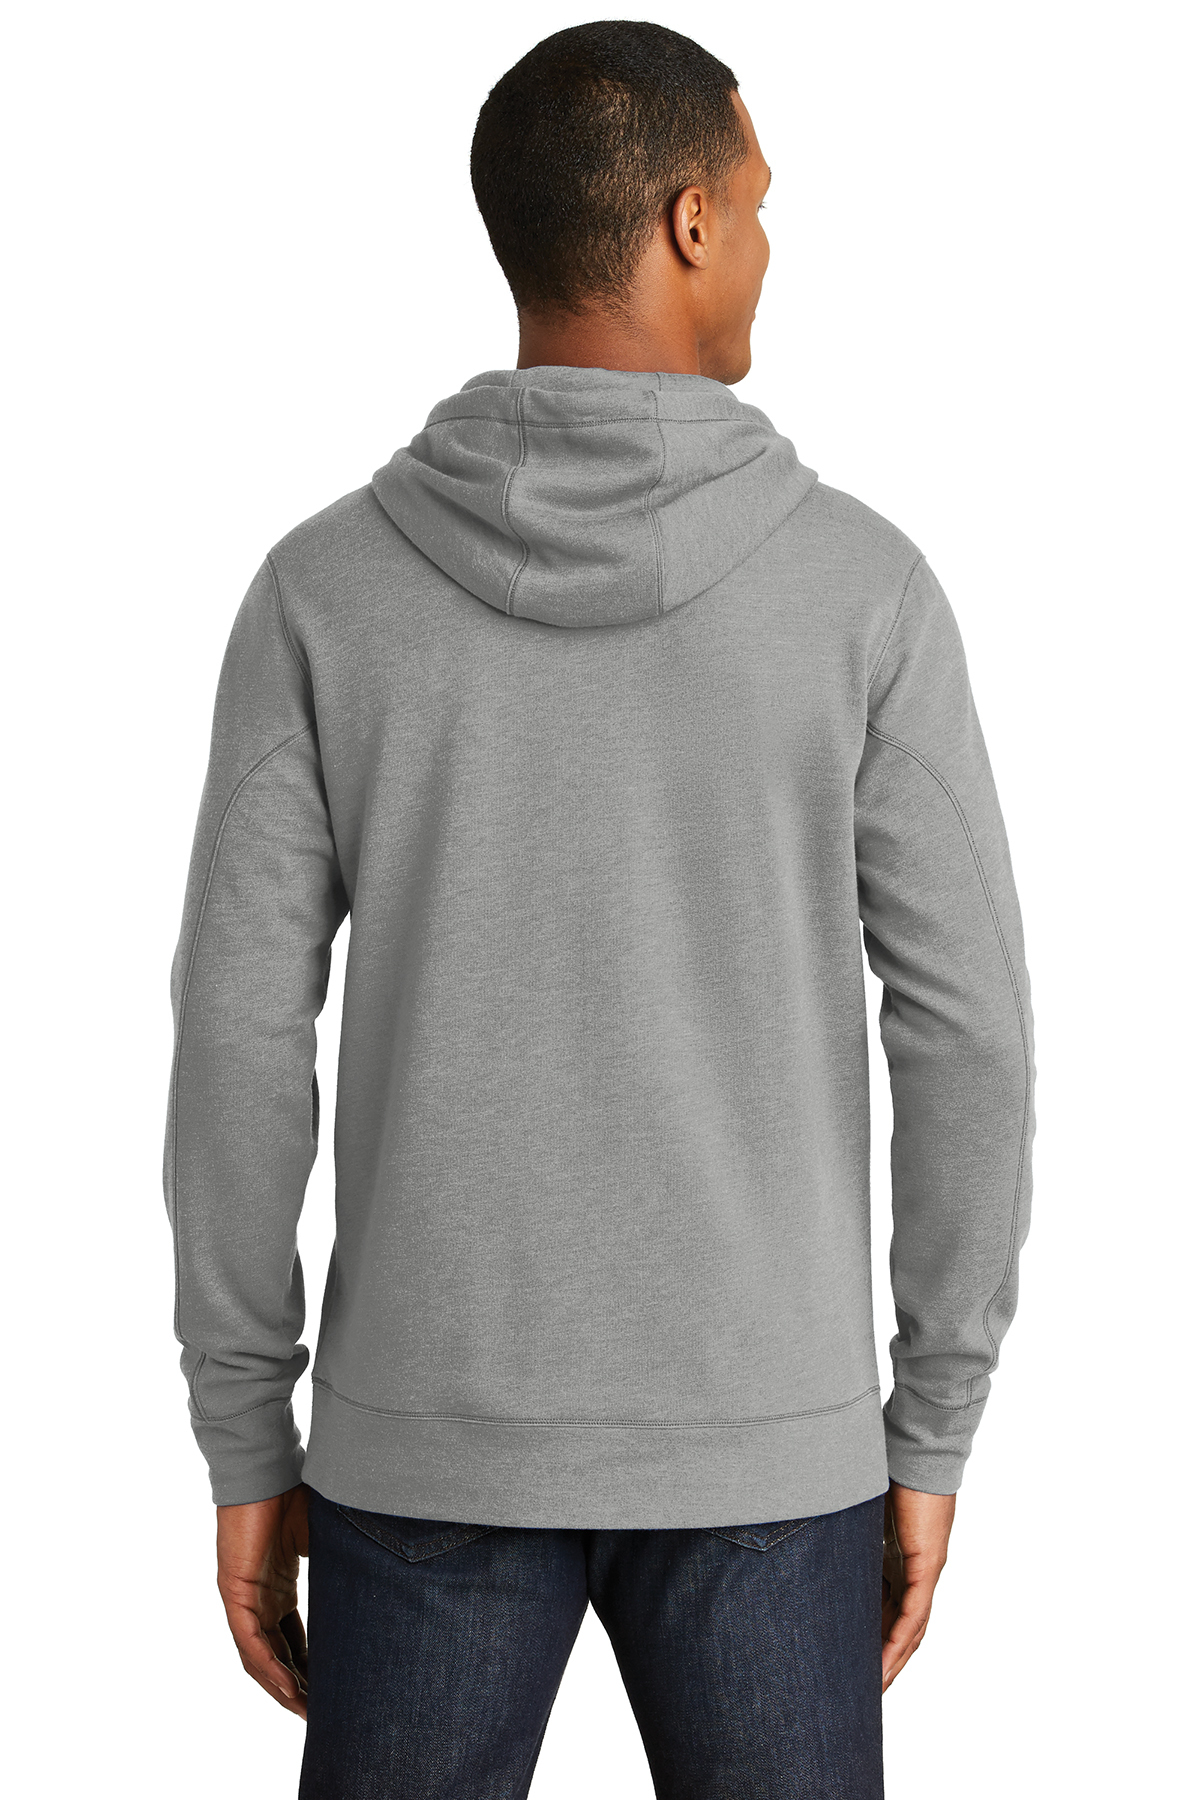 New Era® NEA510 Tri-Blend Fleece Pullover Hoodie size XL3